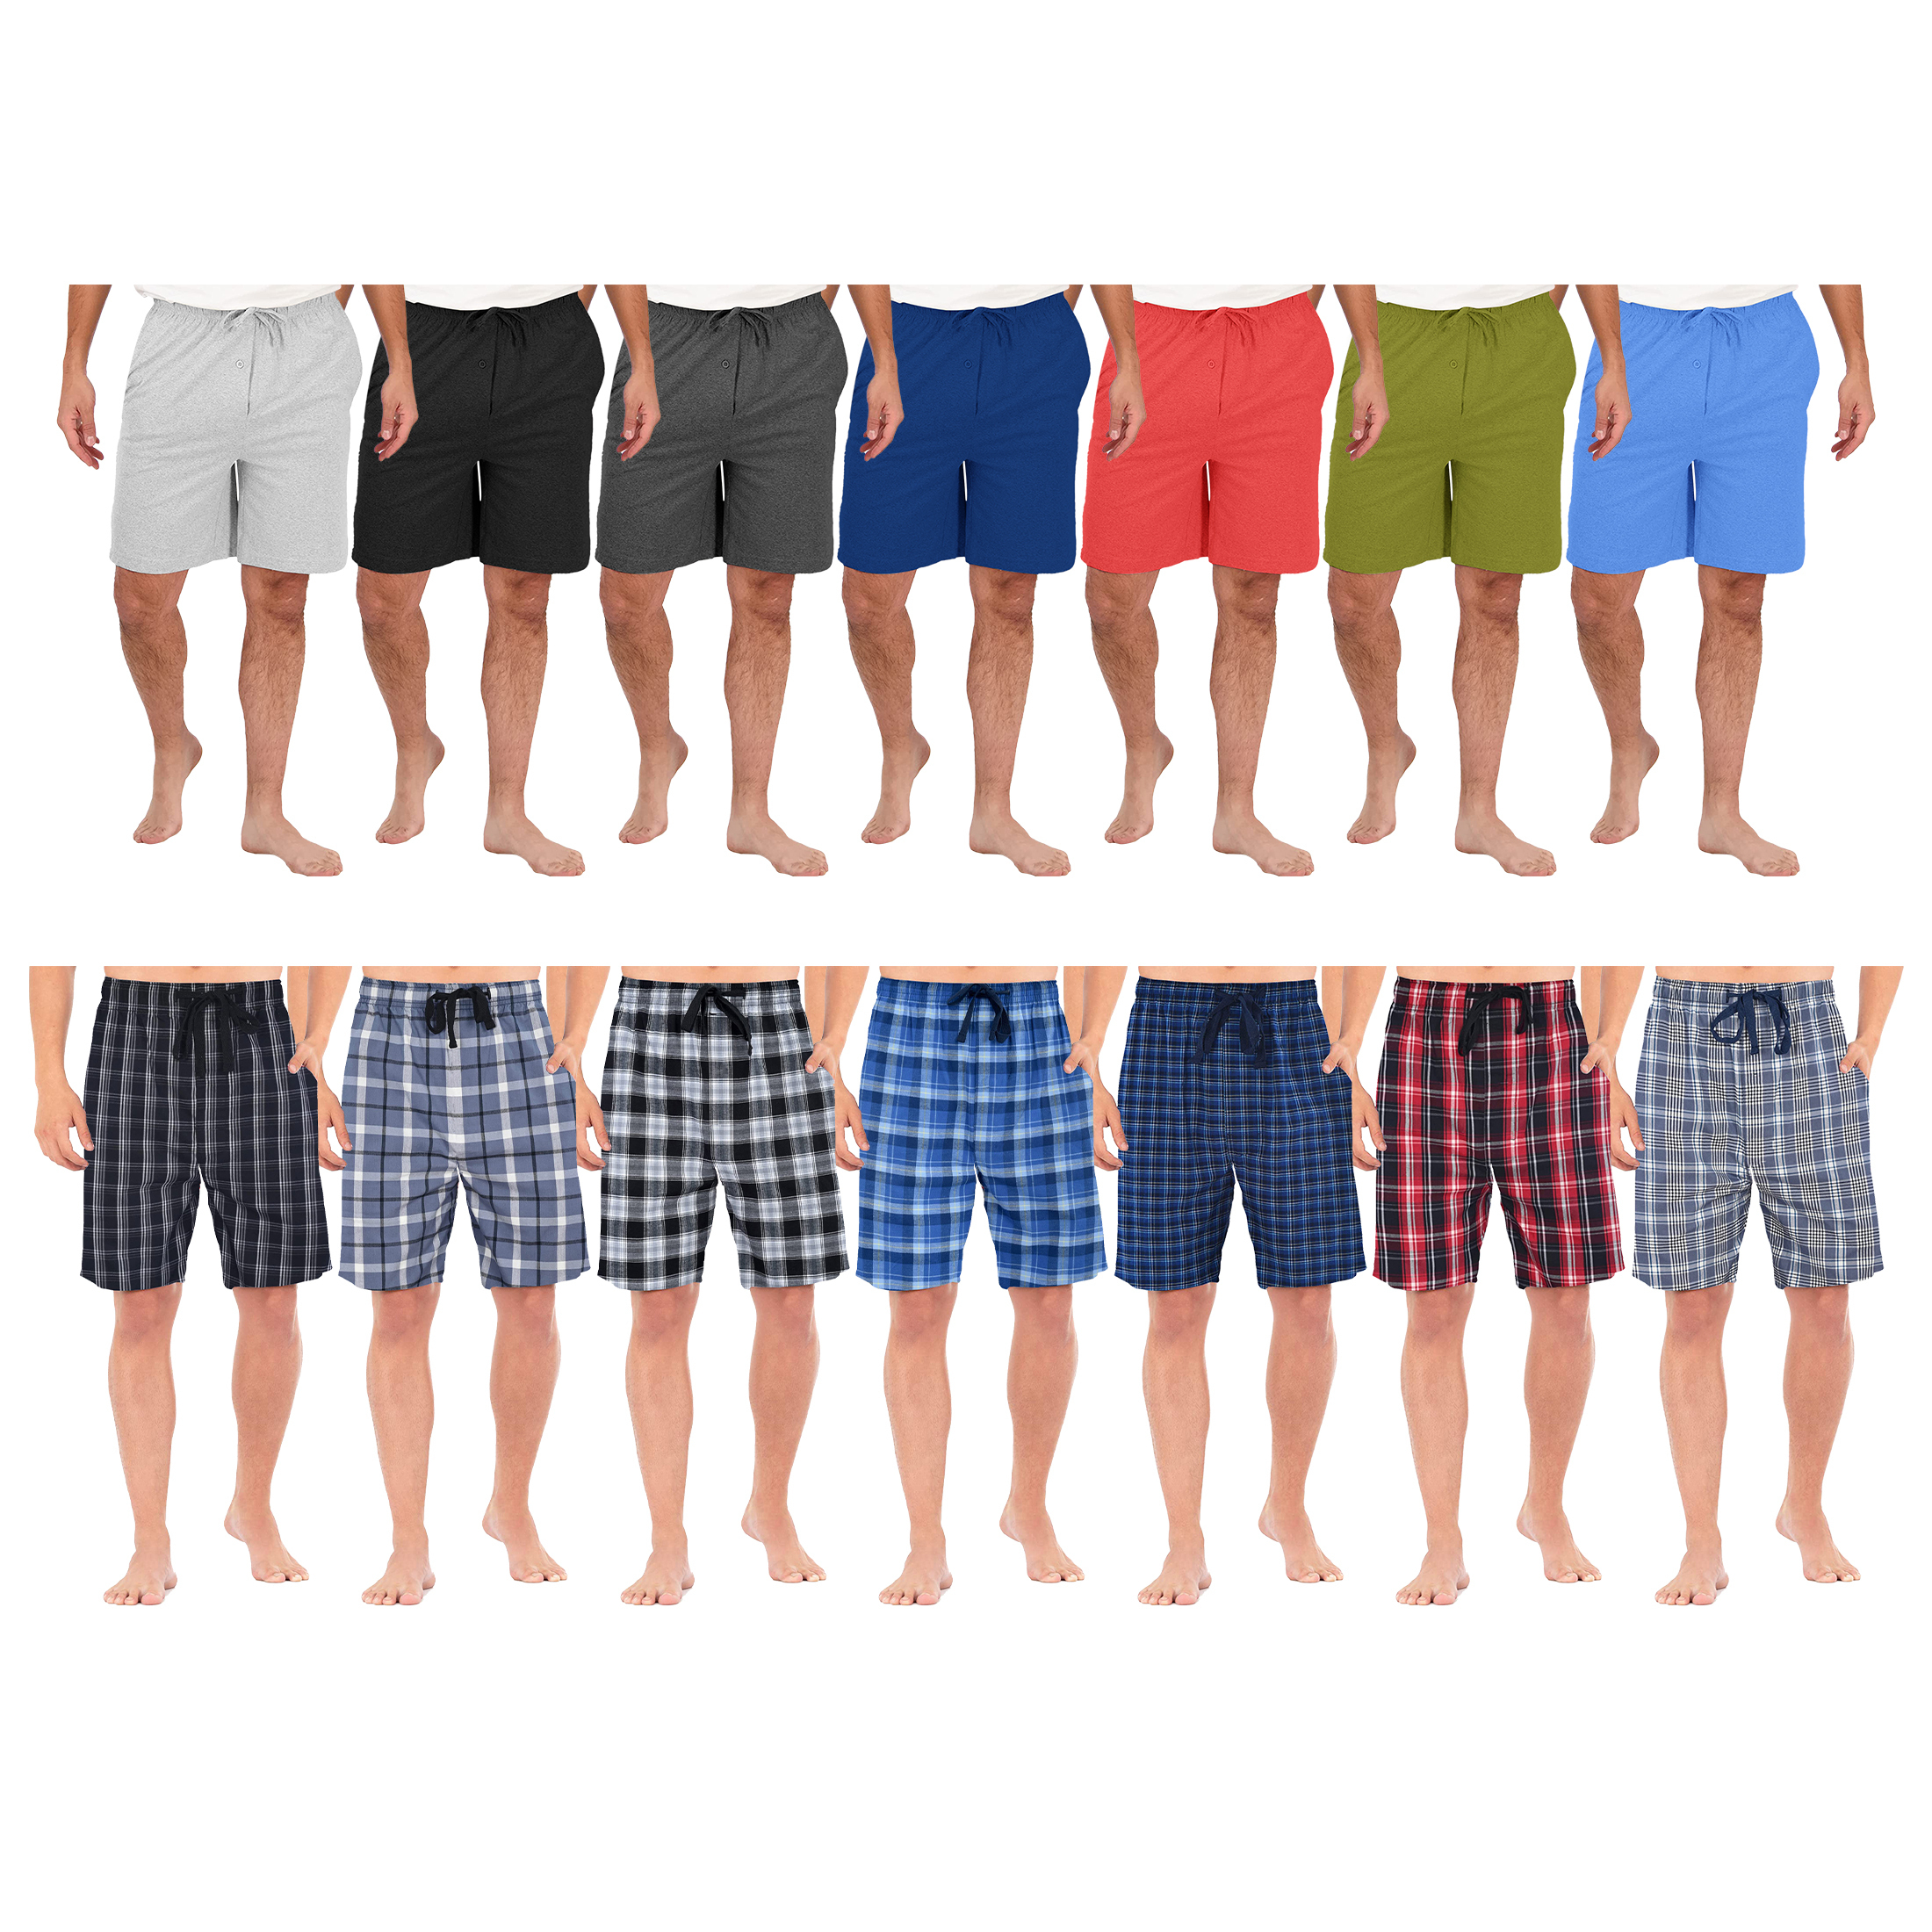 Multi-Pack: Men's Ultra-Soft Jersey Knit Sleep Lounge Pajama Shorts For Sleepwear - Solid, 3 Pack, Medium